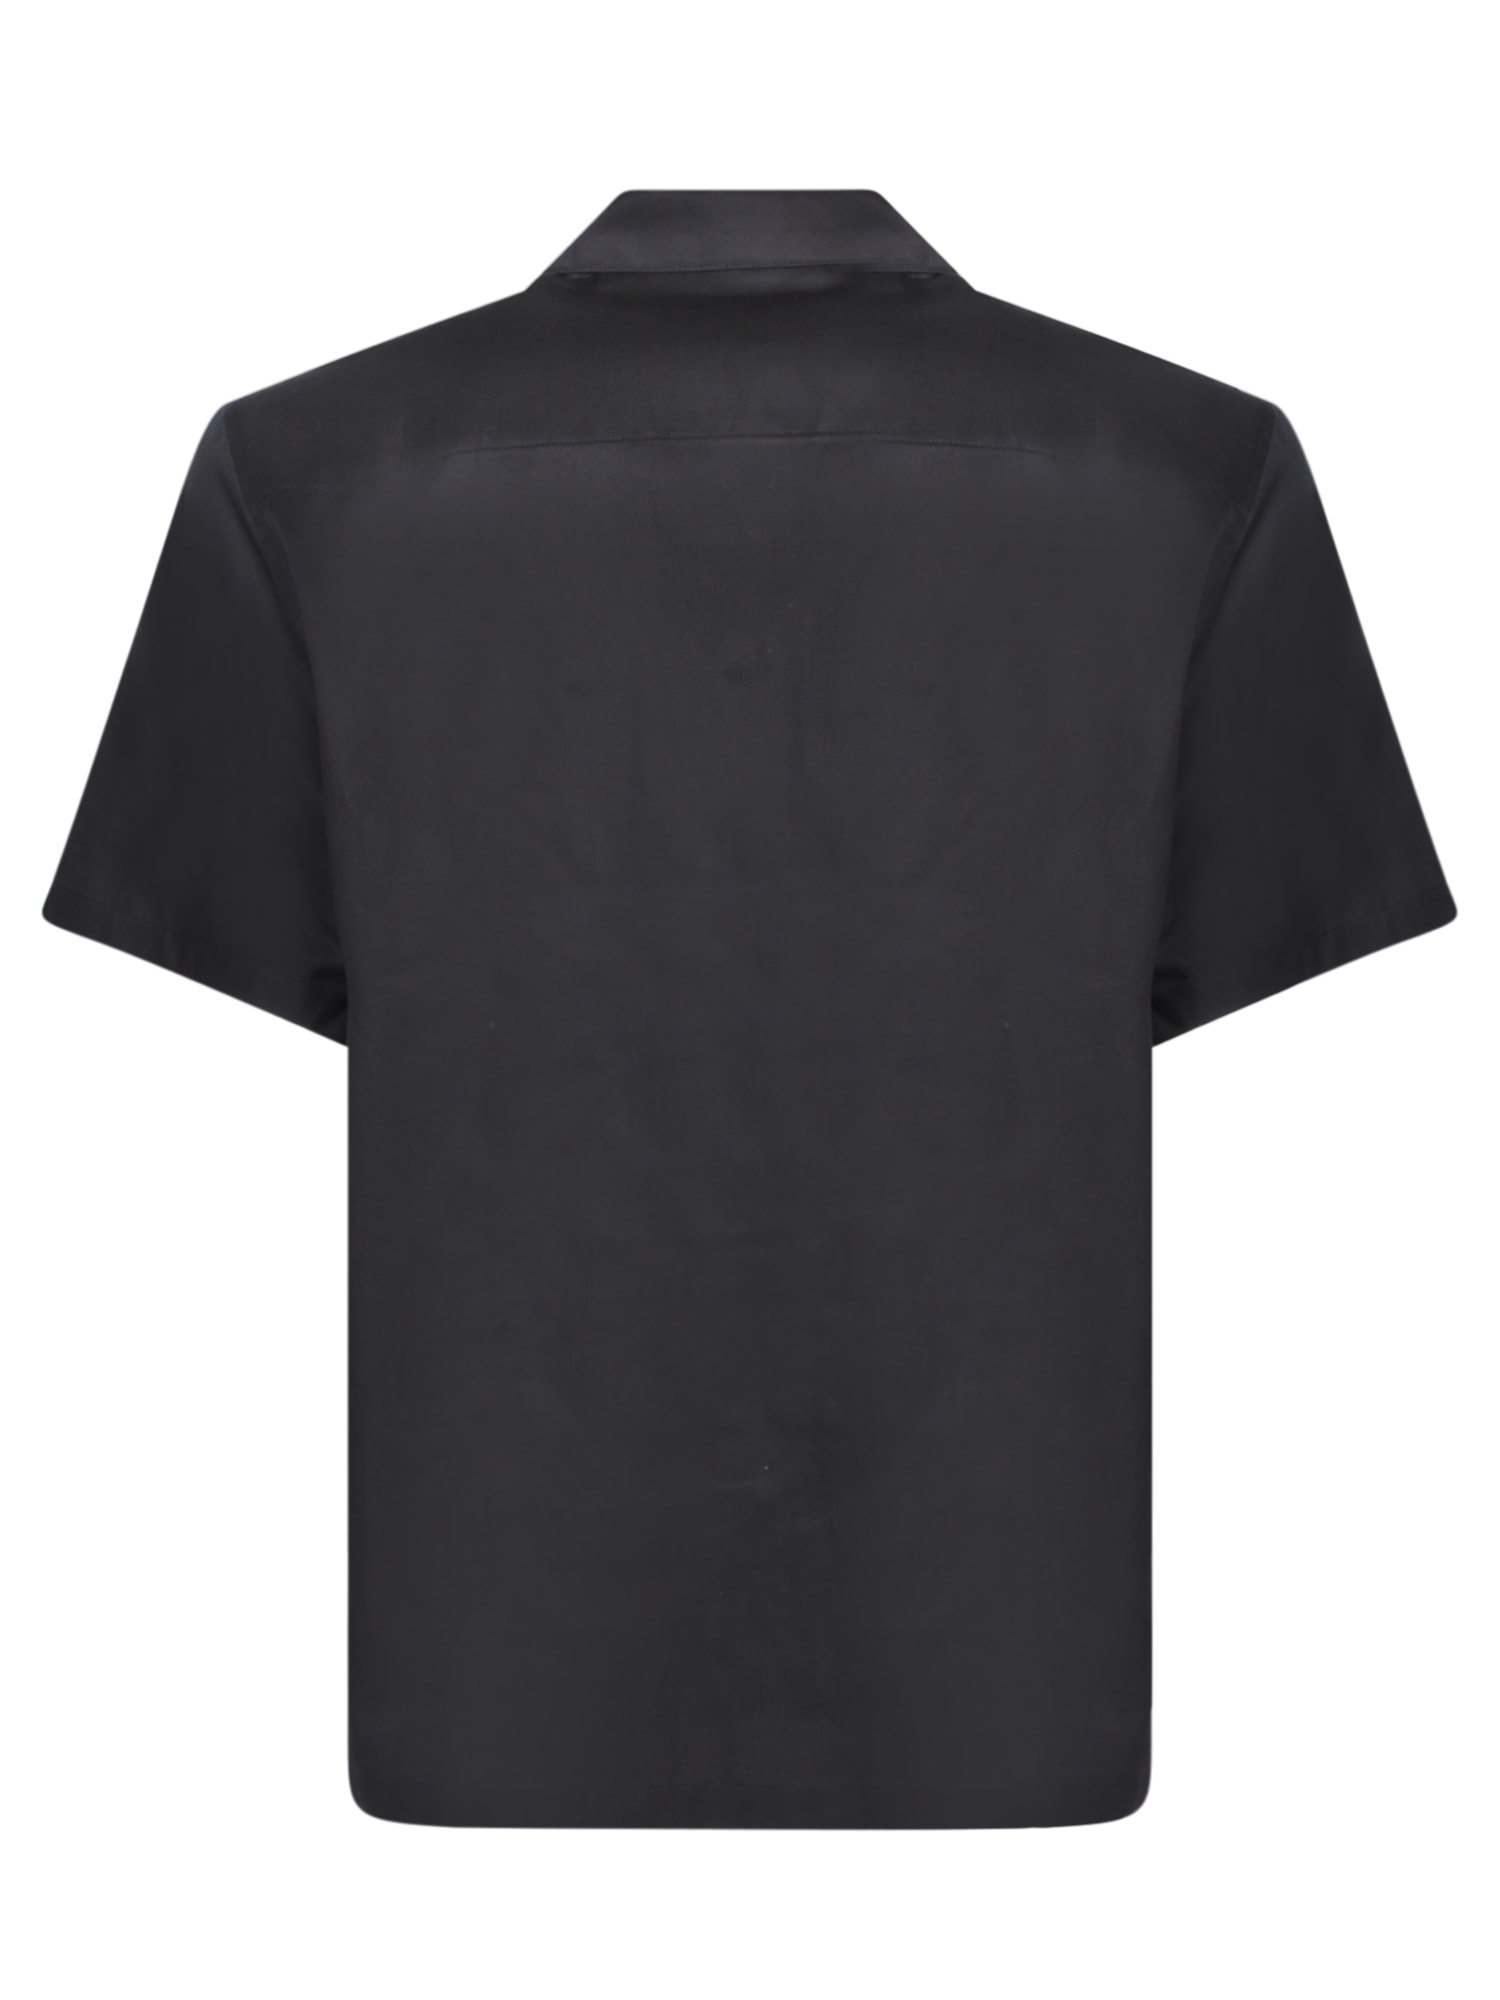 Shop Carhartt Delray Black Shirt